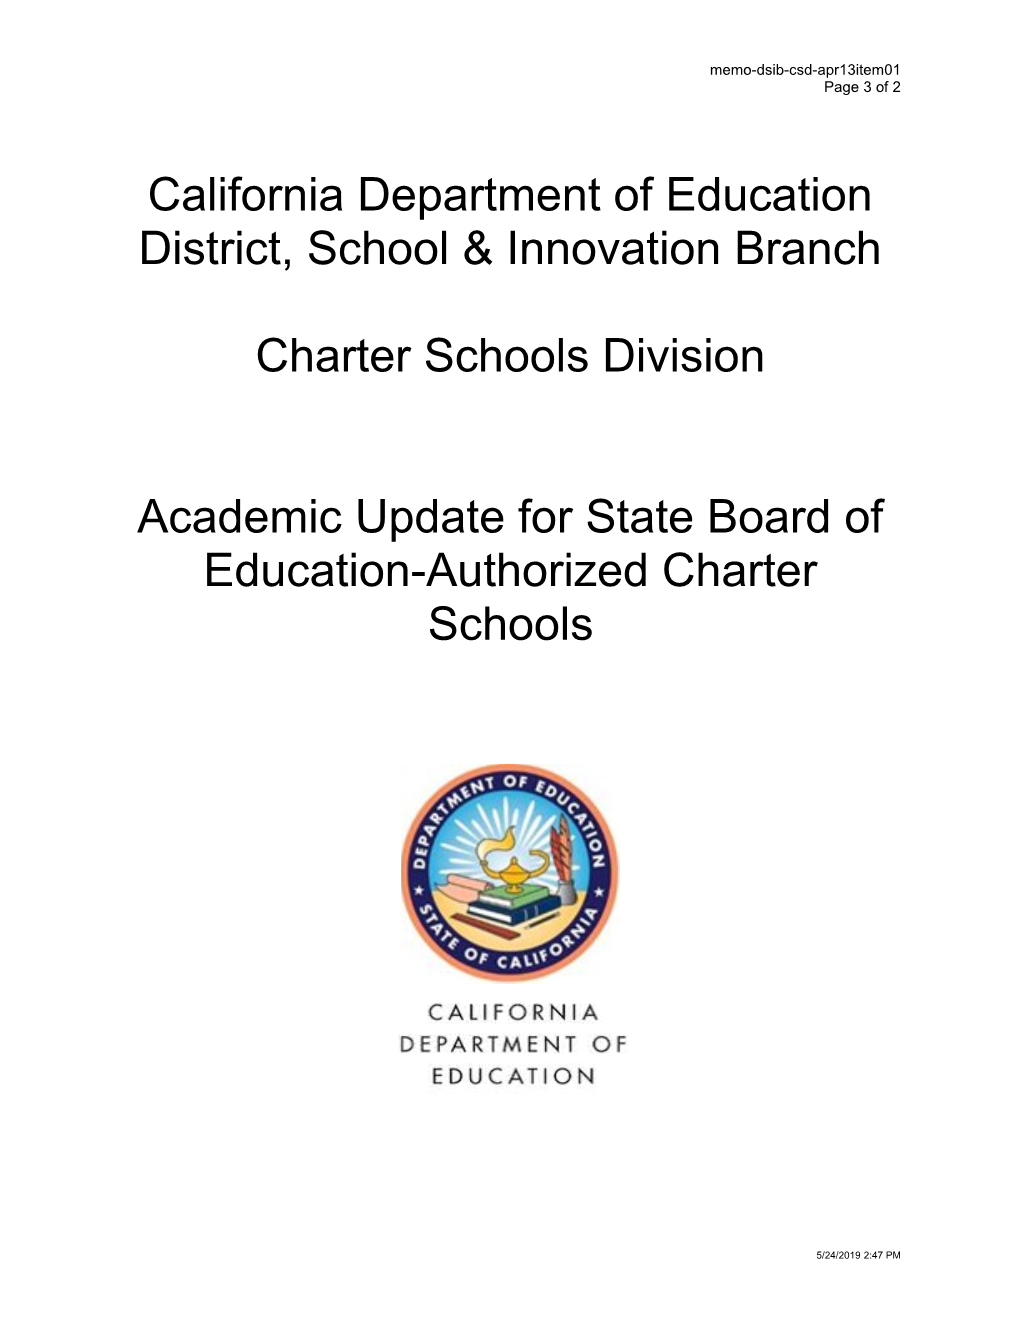 April 2013 Info Memo DSIB CSD Item 1 - Information Memorandum (CA State Board of Education)